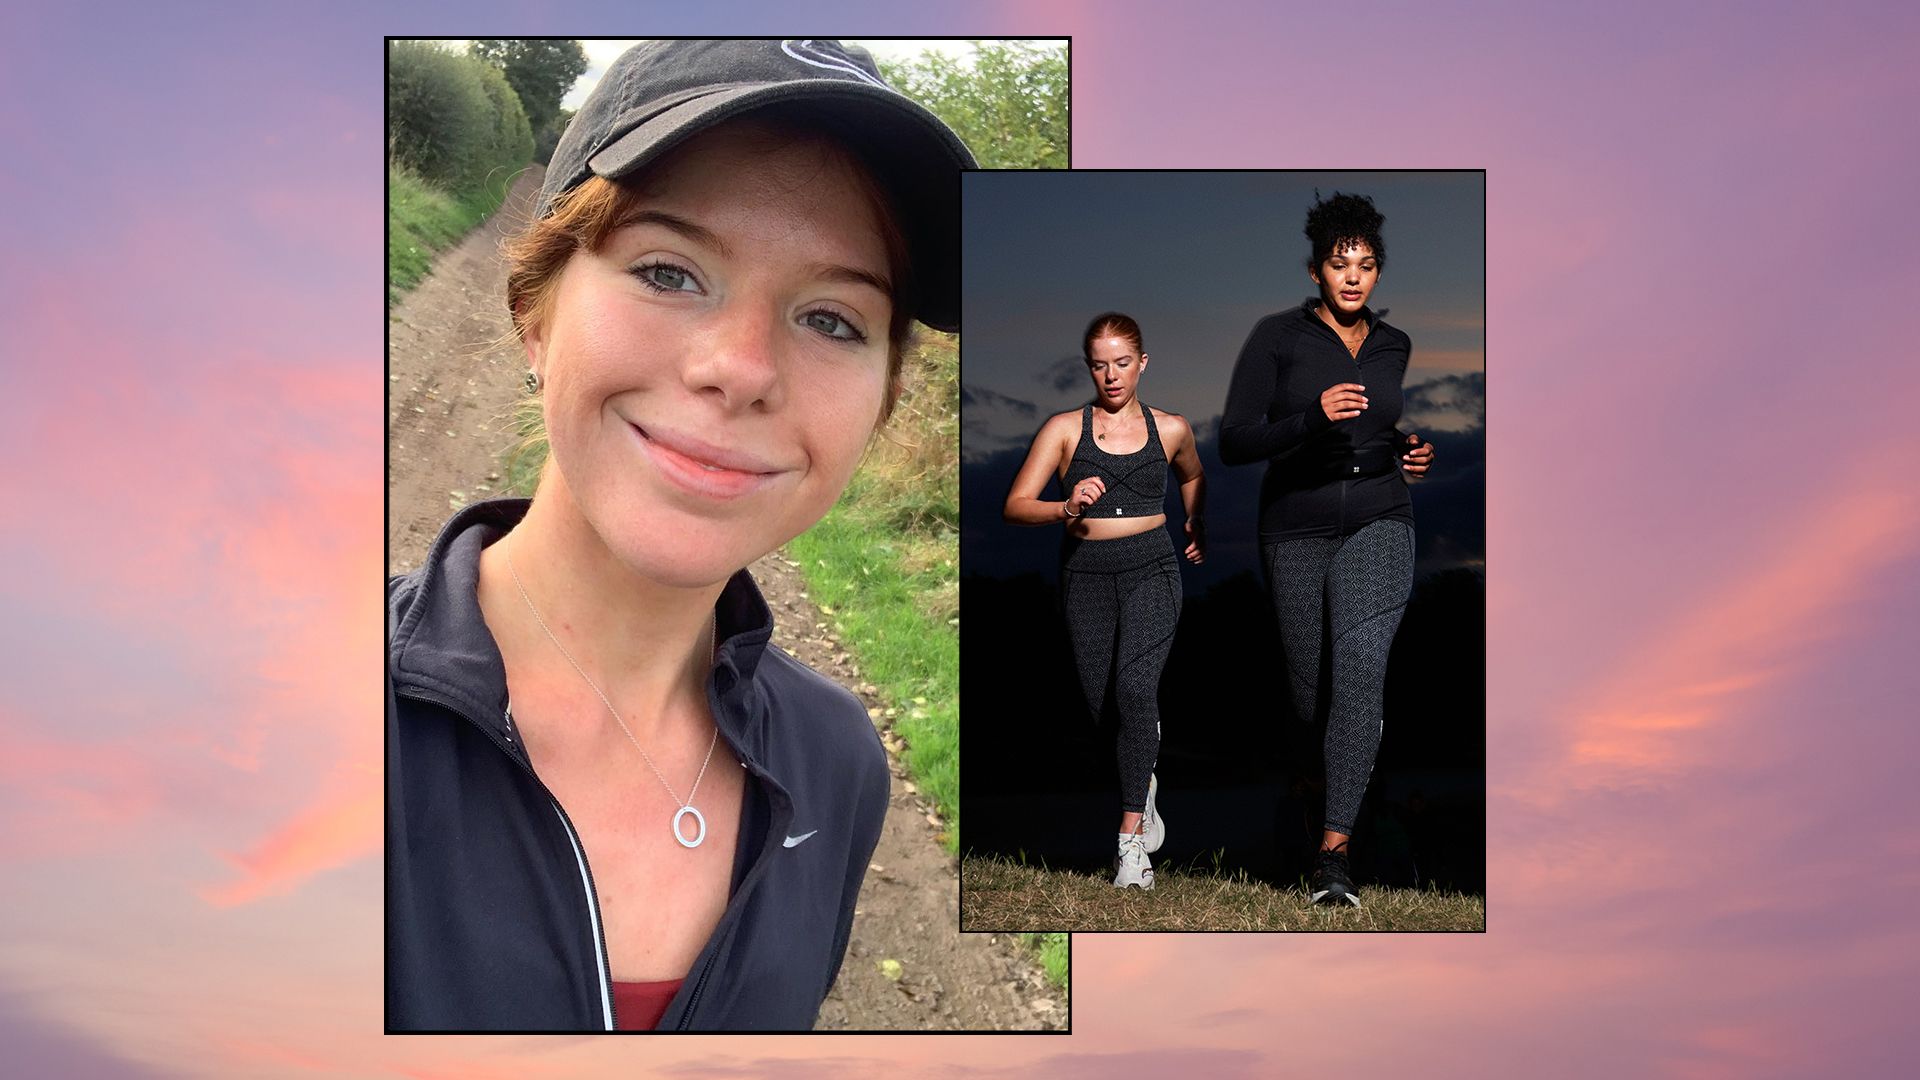 Collage of women running 